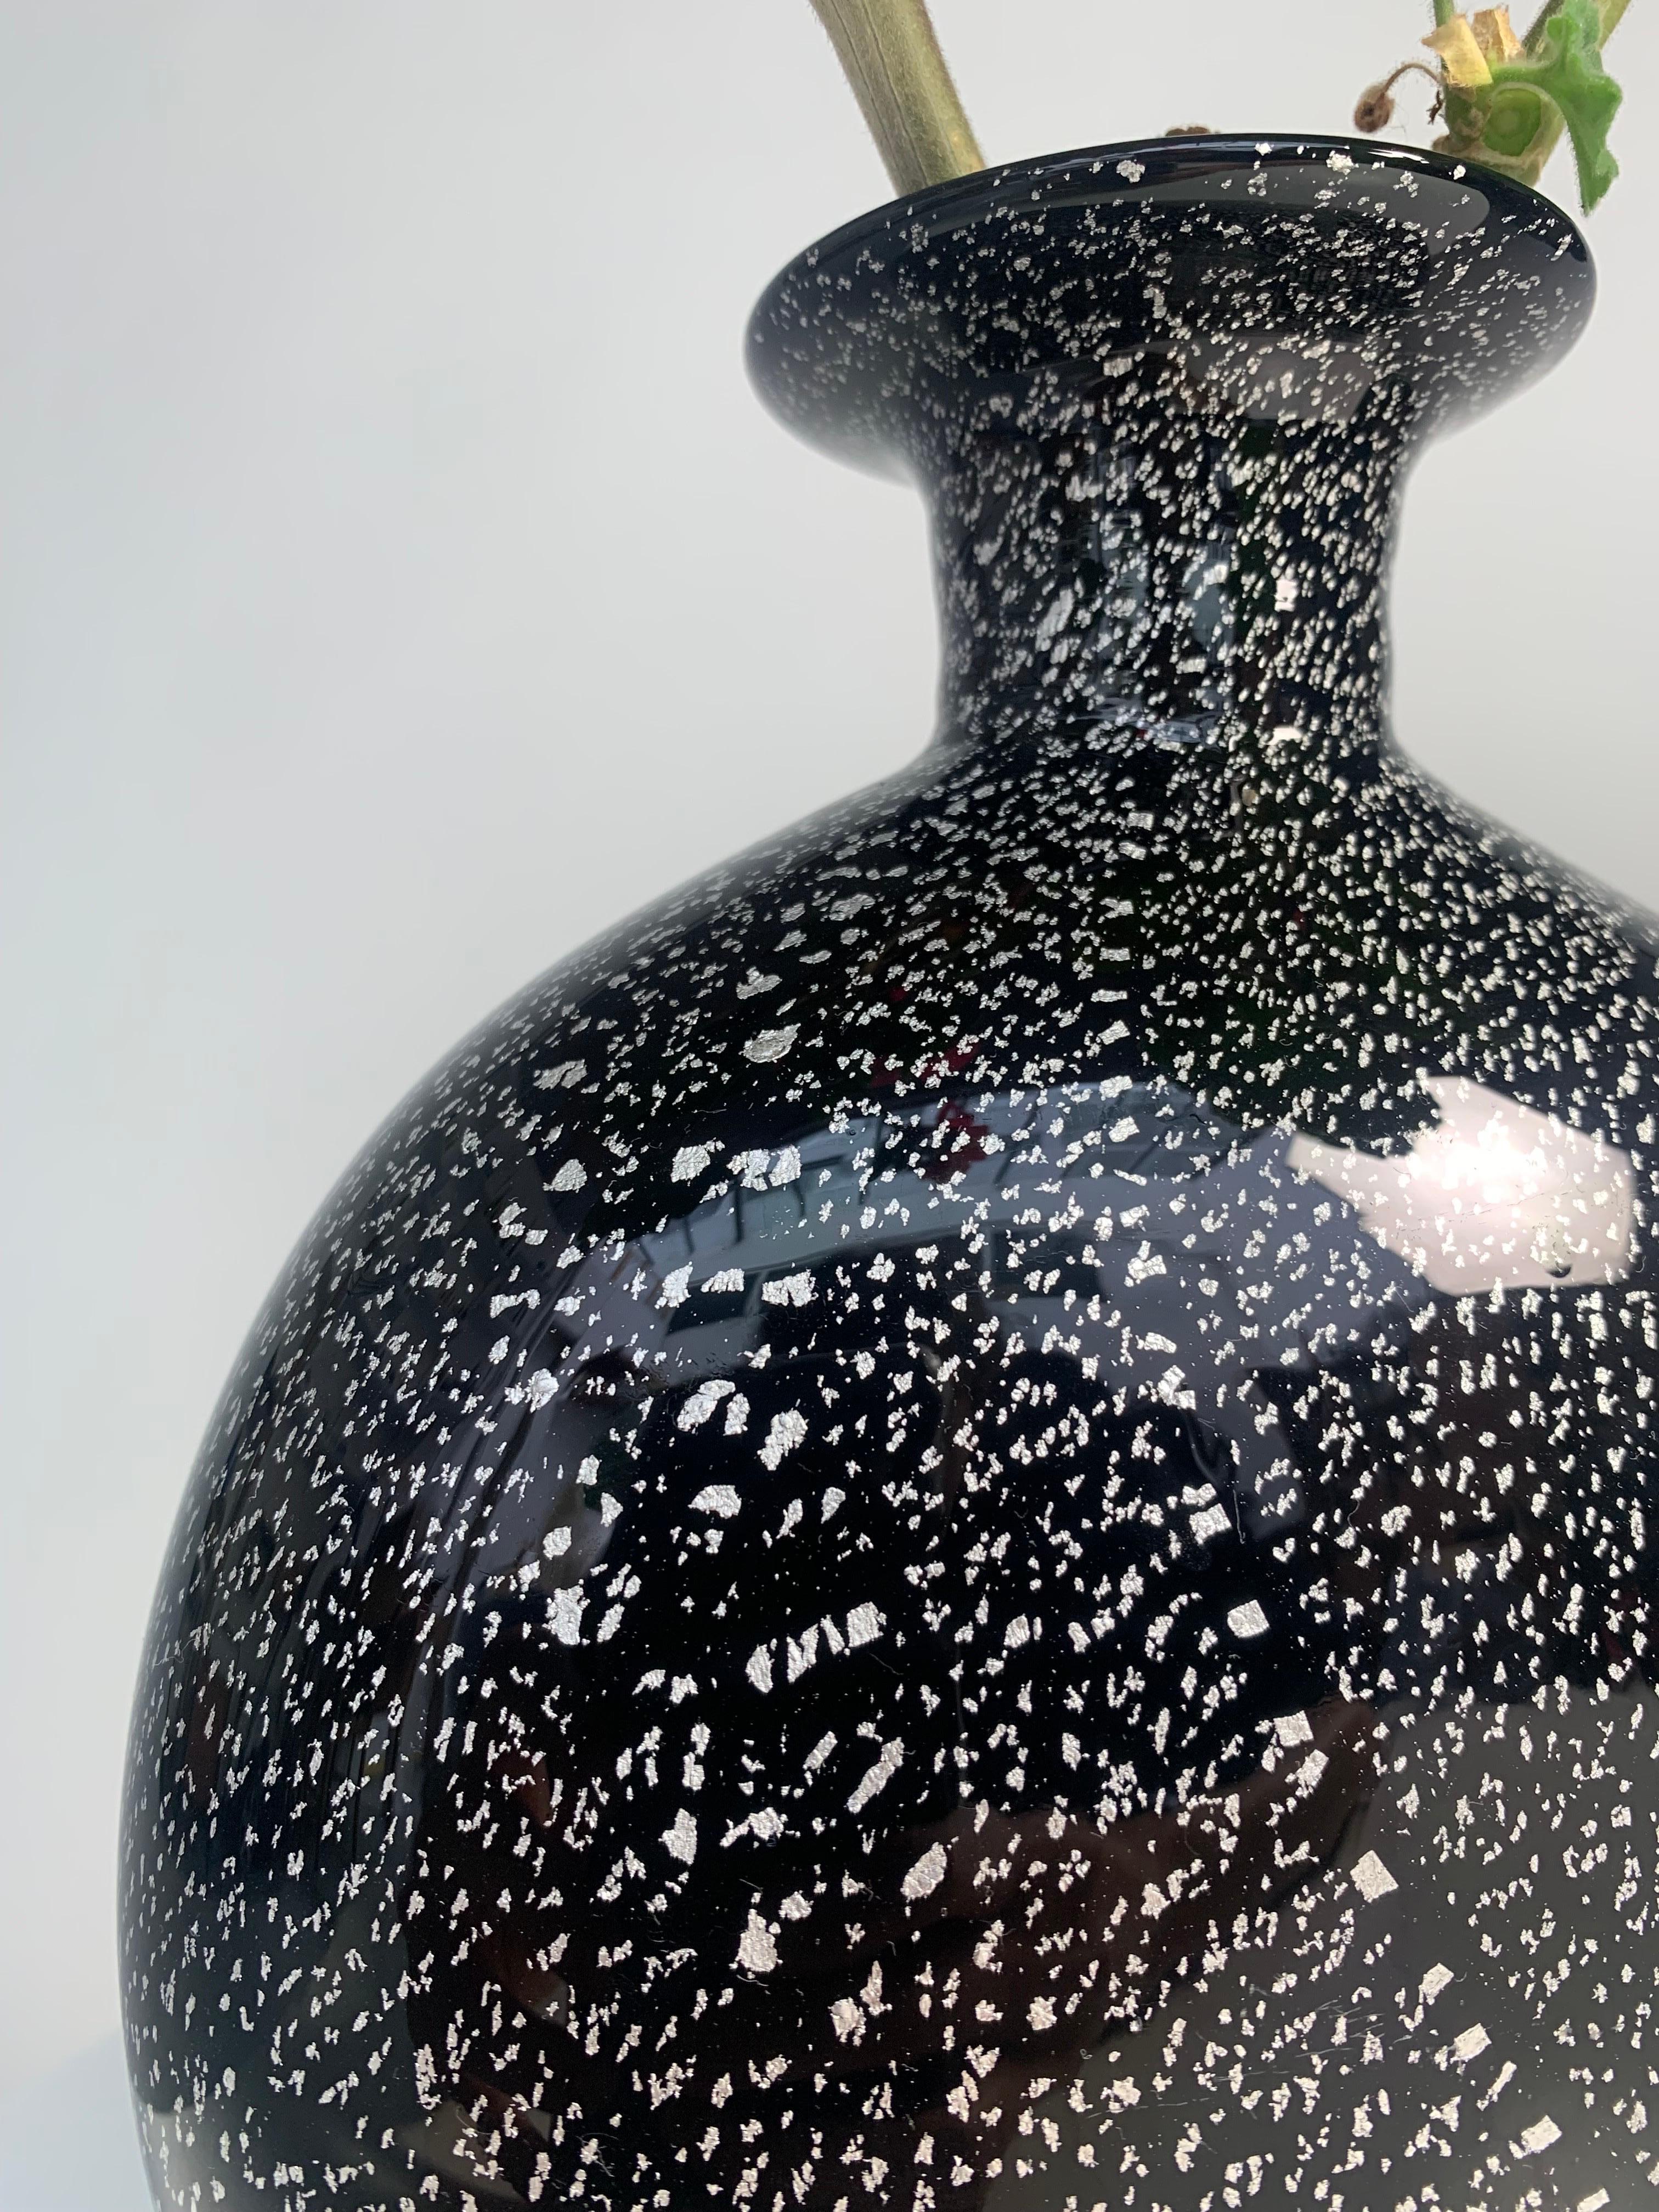 Archimede Seguso Glass Vase Silver Flecks Murano Italy 1970s For Sale 3